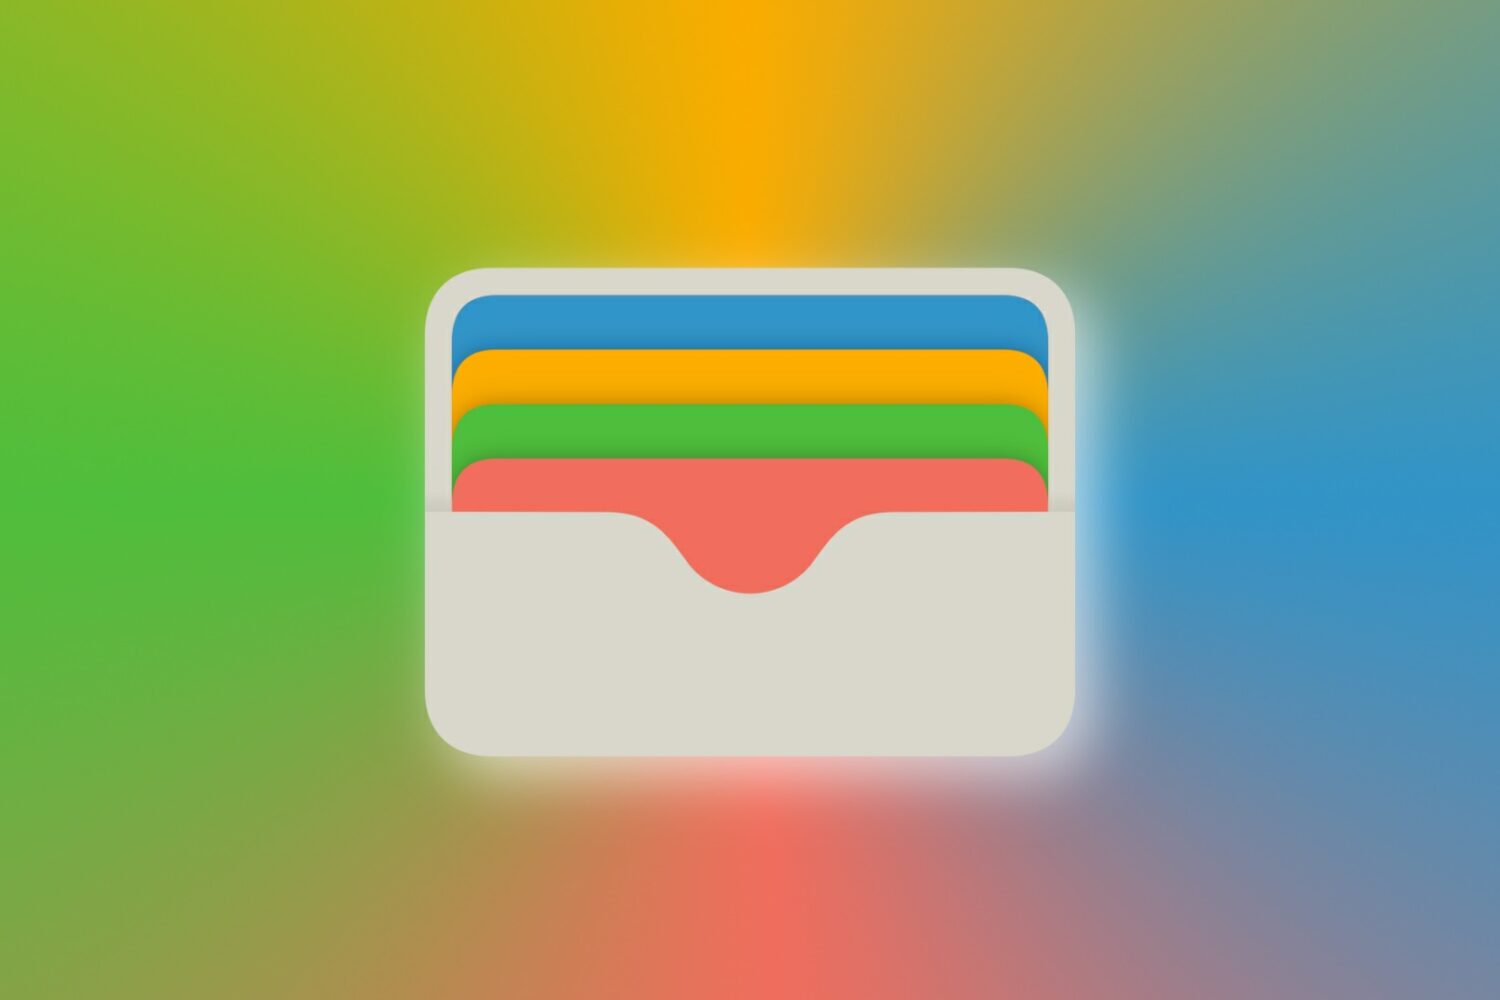 The Apple Wallet app icon set against a color gradient background